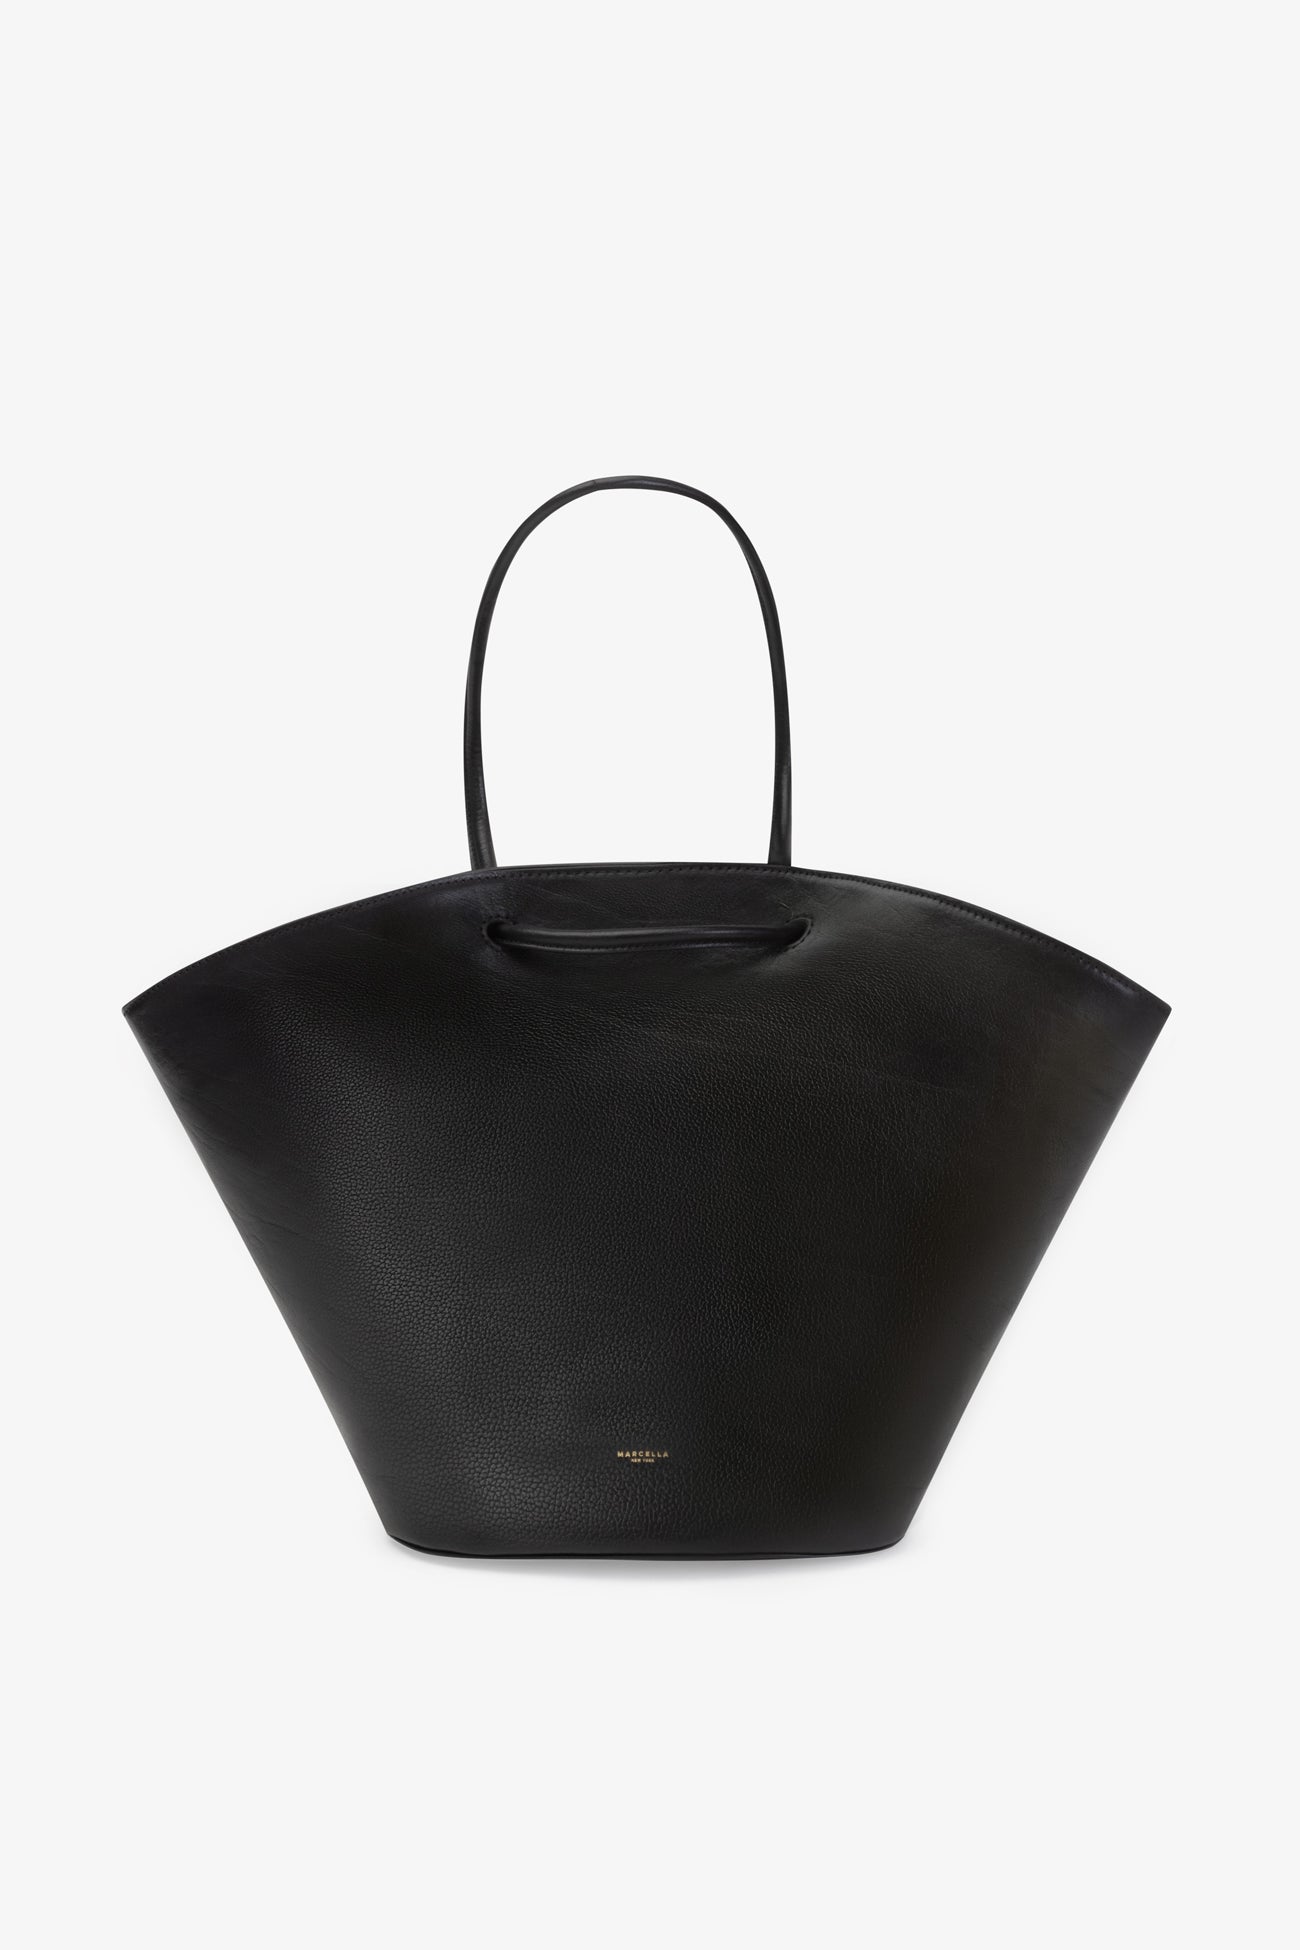 Which Celine bucket bag gets your vote? : r/handbags